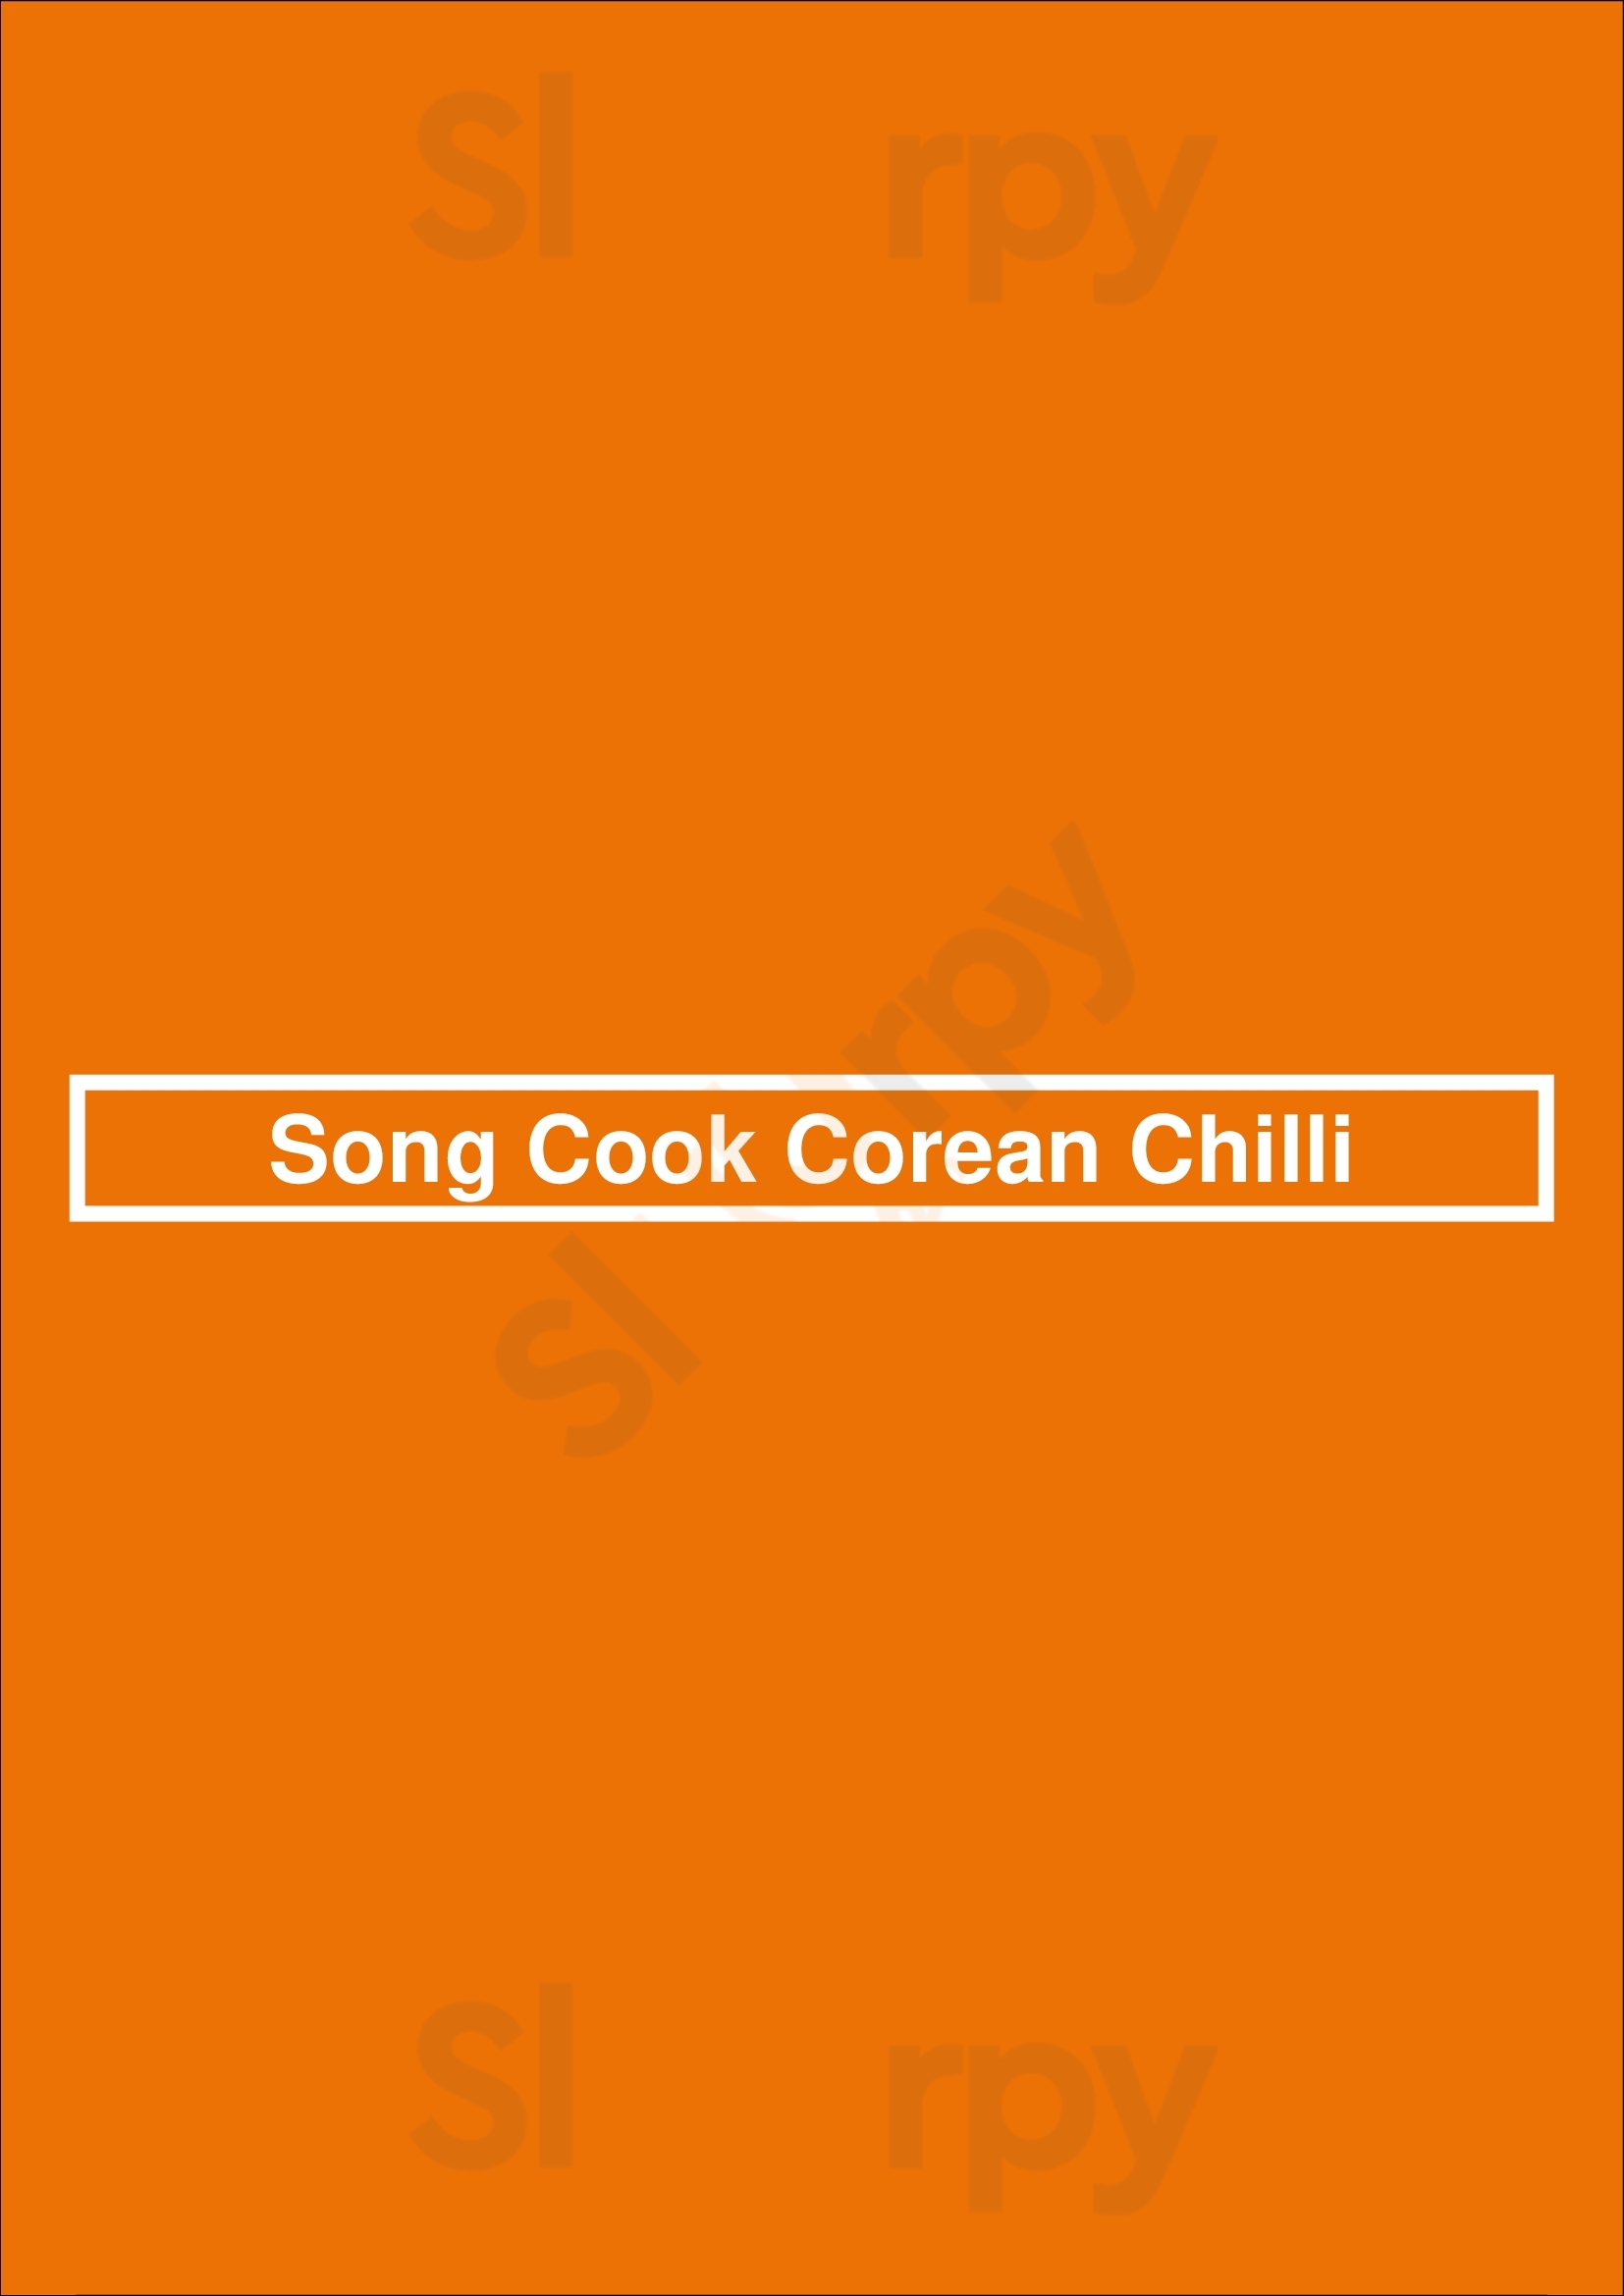 Song Cook Corean Chilli Mississauga Menu - 1